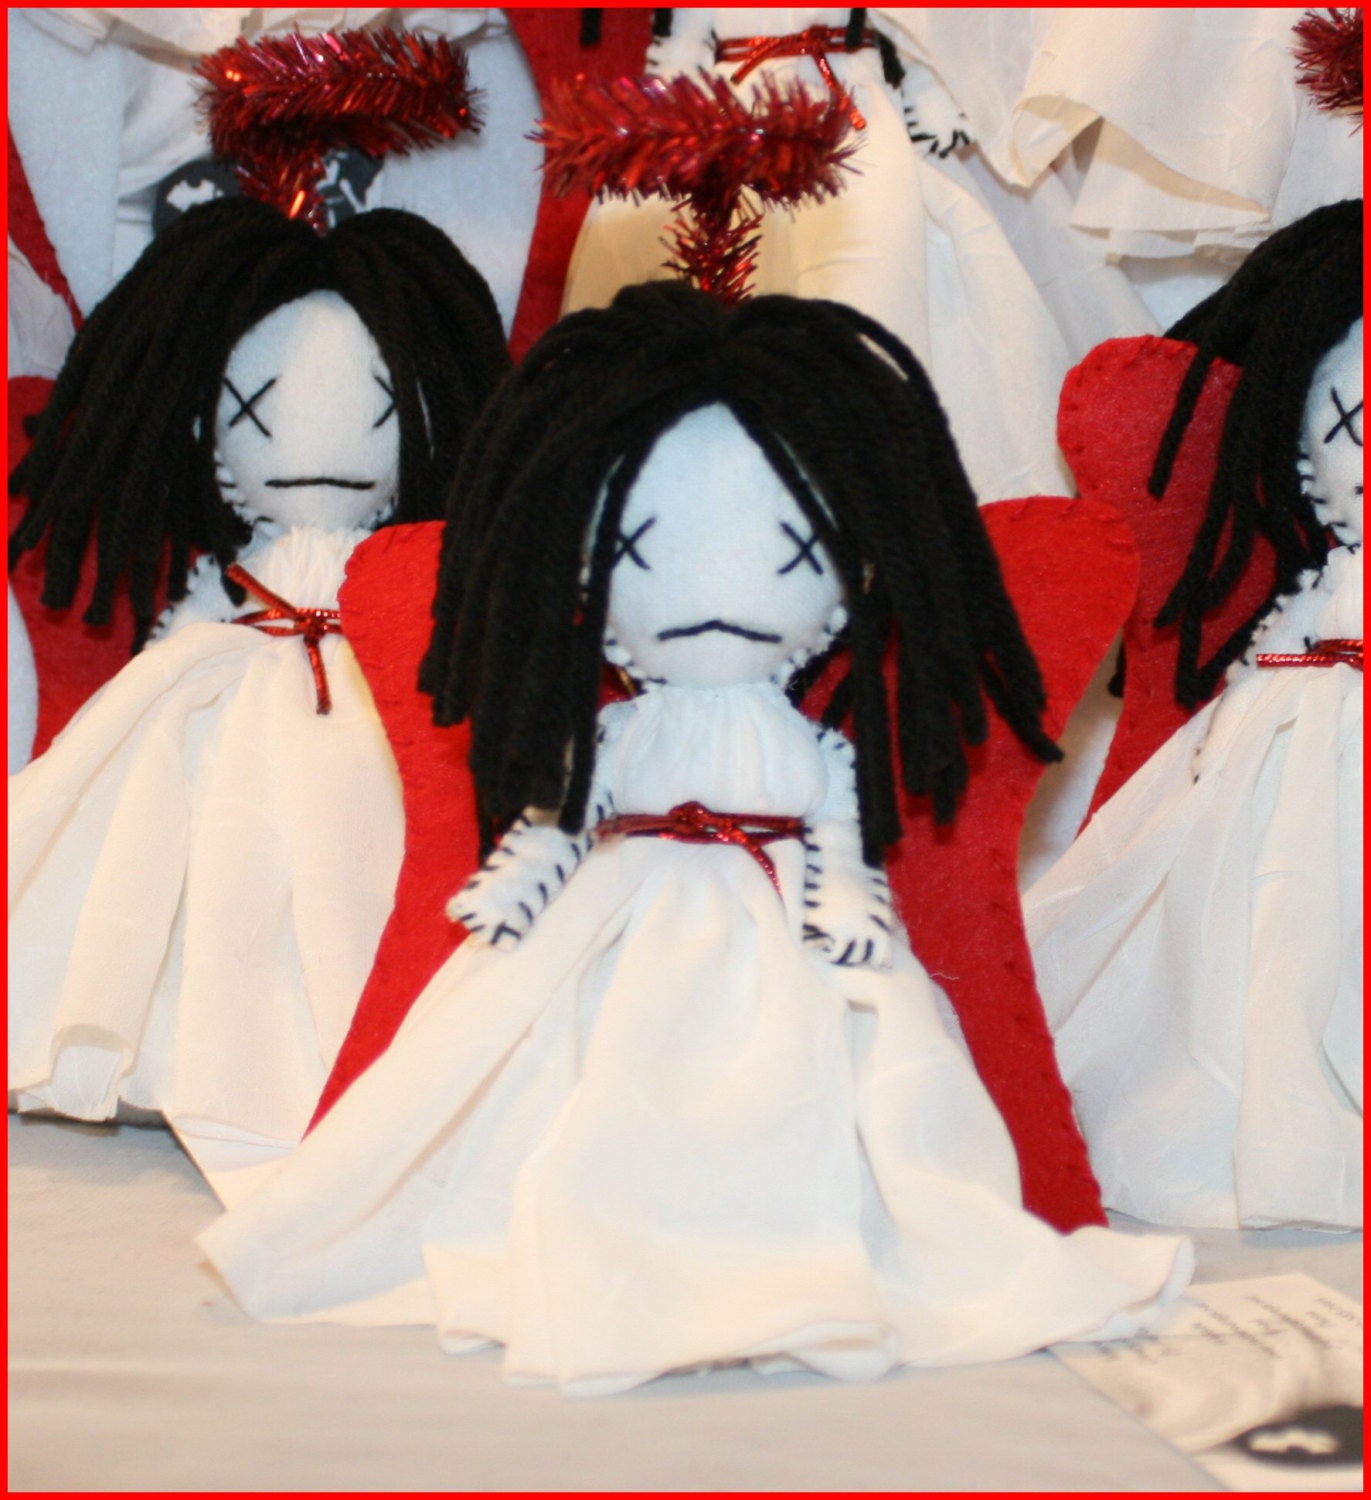 OOAK Angel Christmas Tree Ornament Hand Stitched Doll Creepy Gothic Folk Art By Jodi Cain - TatteredRags